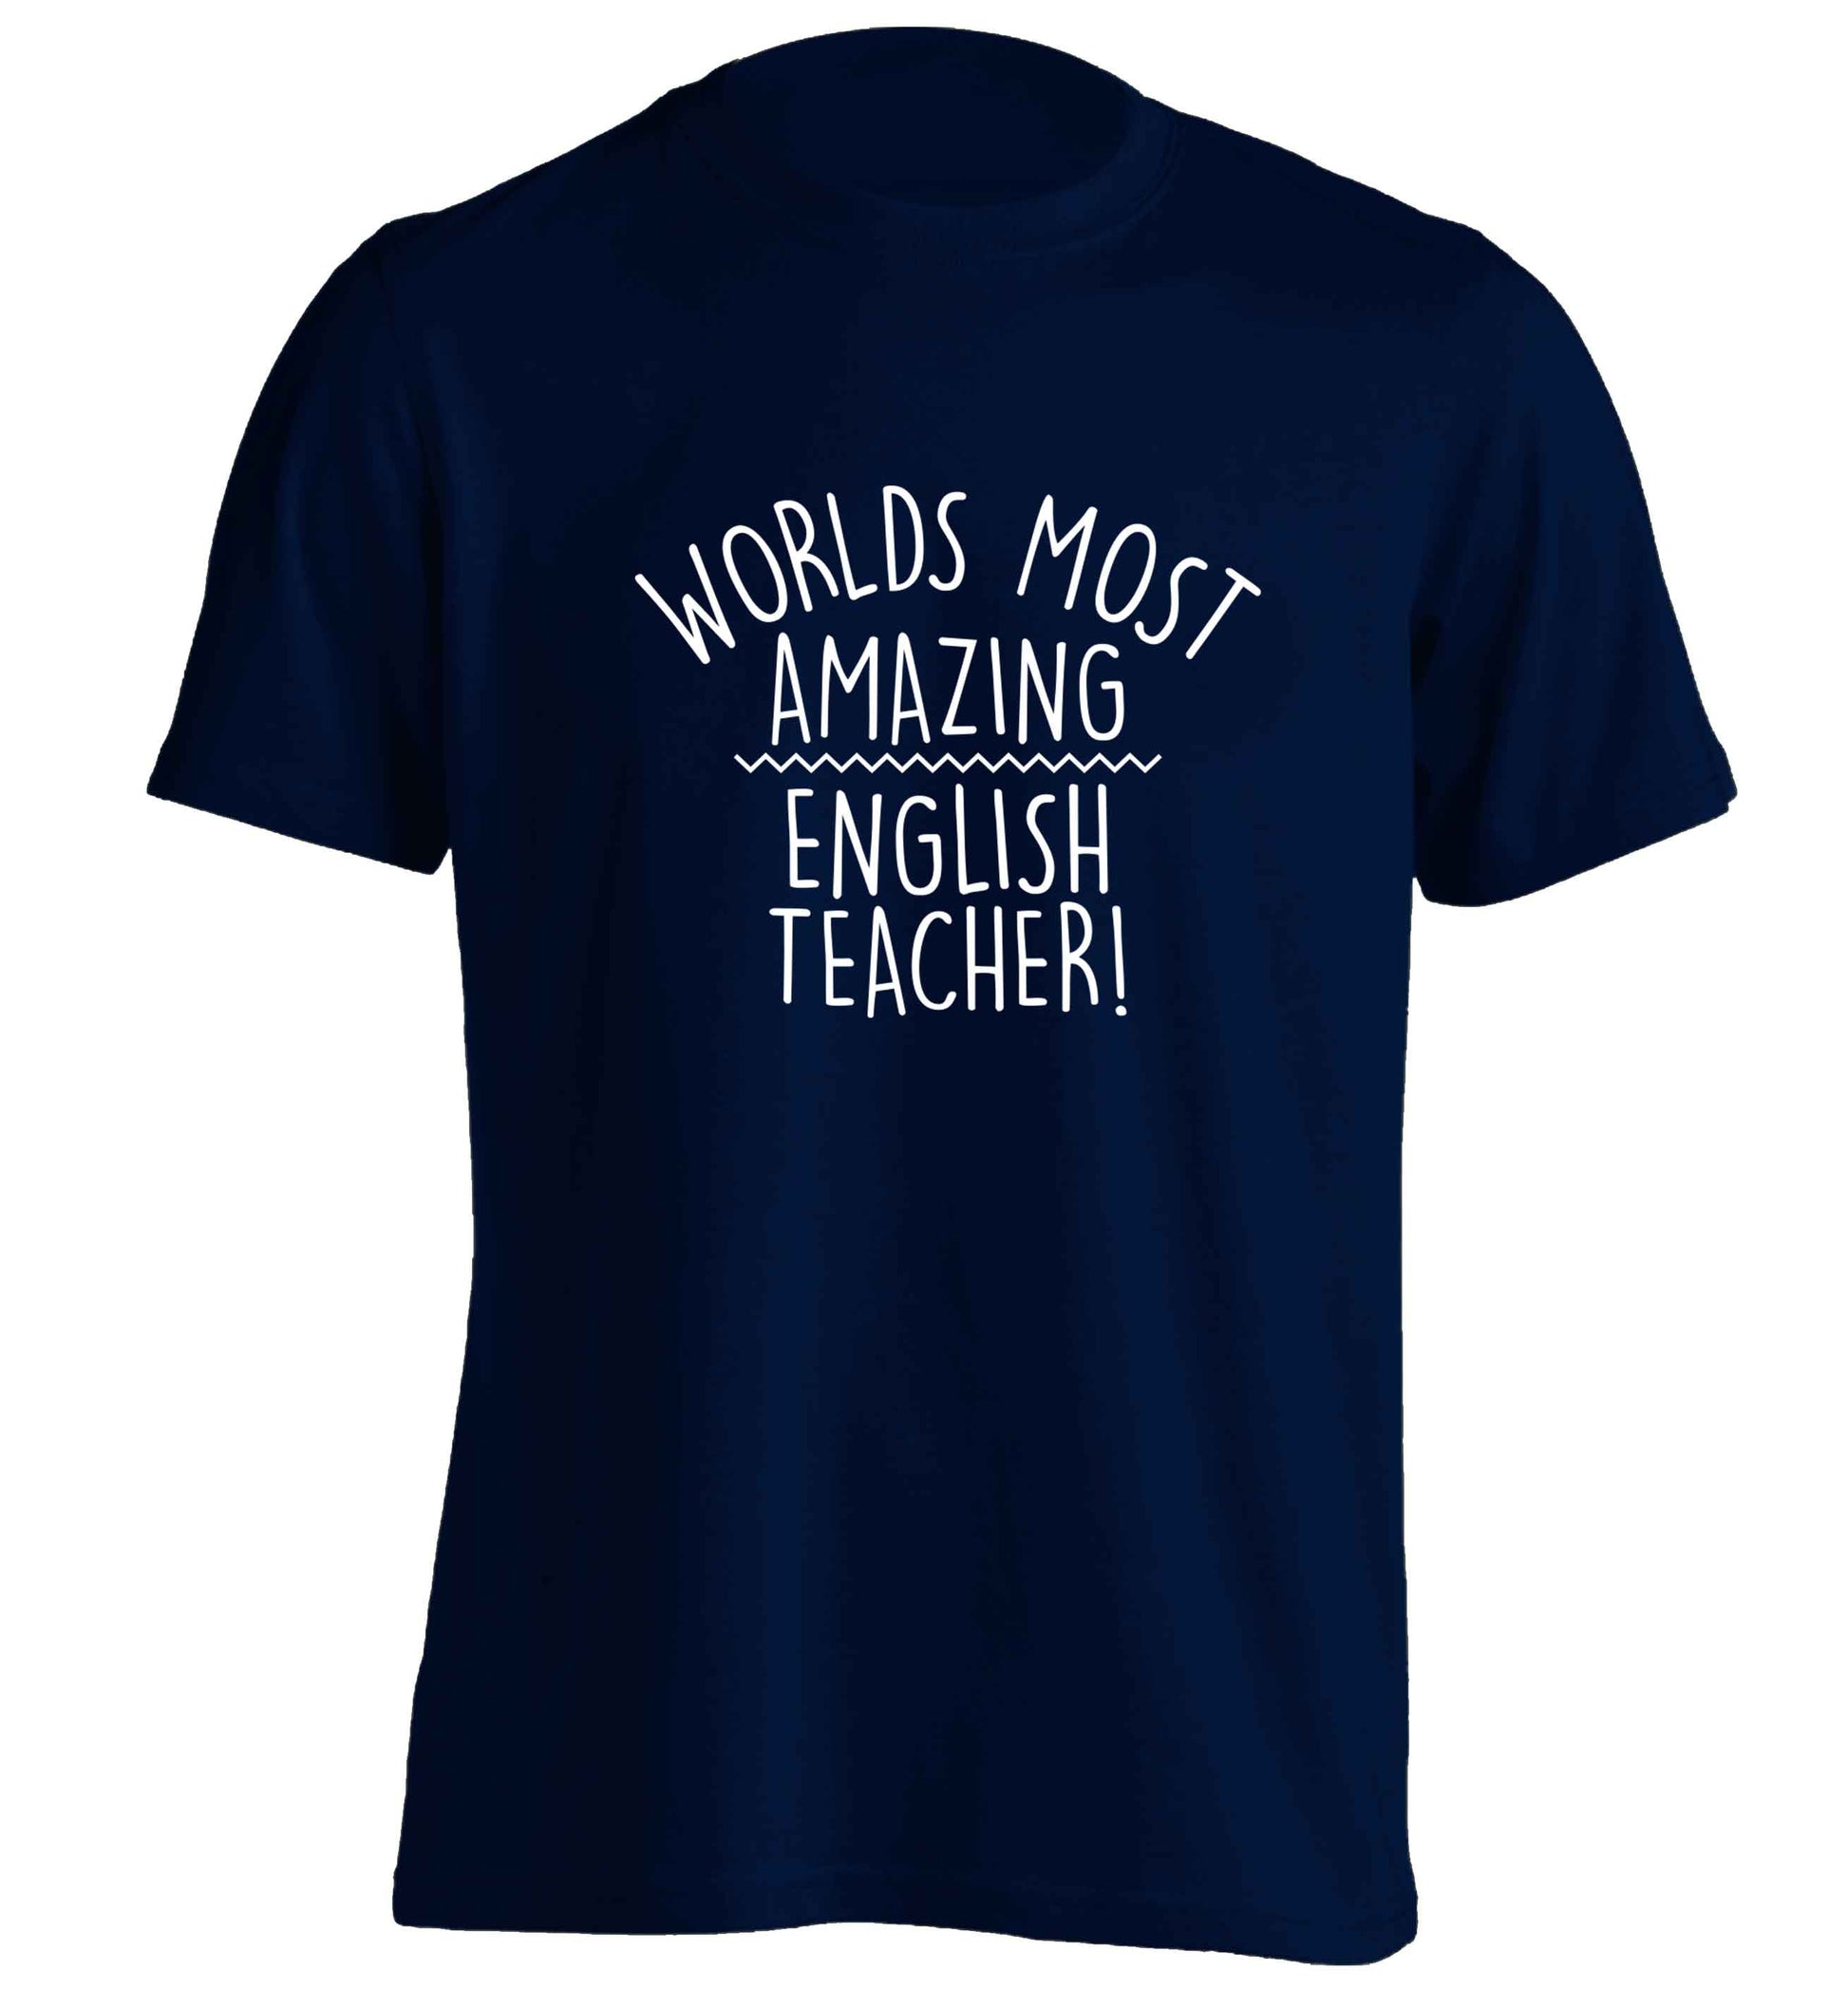 Worlds most amazing English teacher adults unisex navy Tshirt 2XL